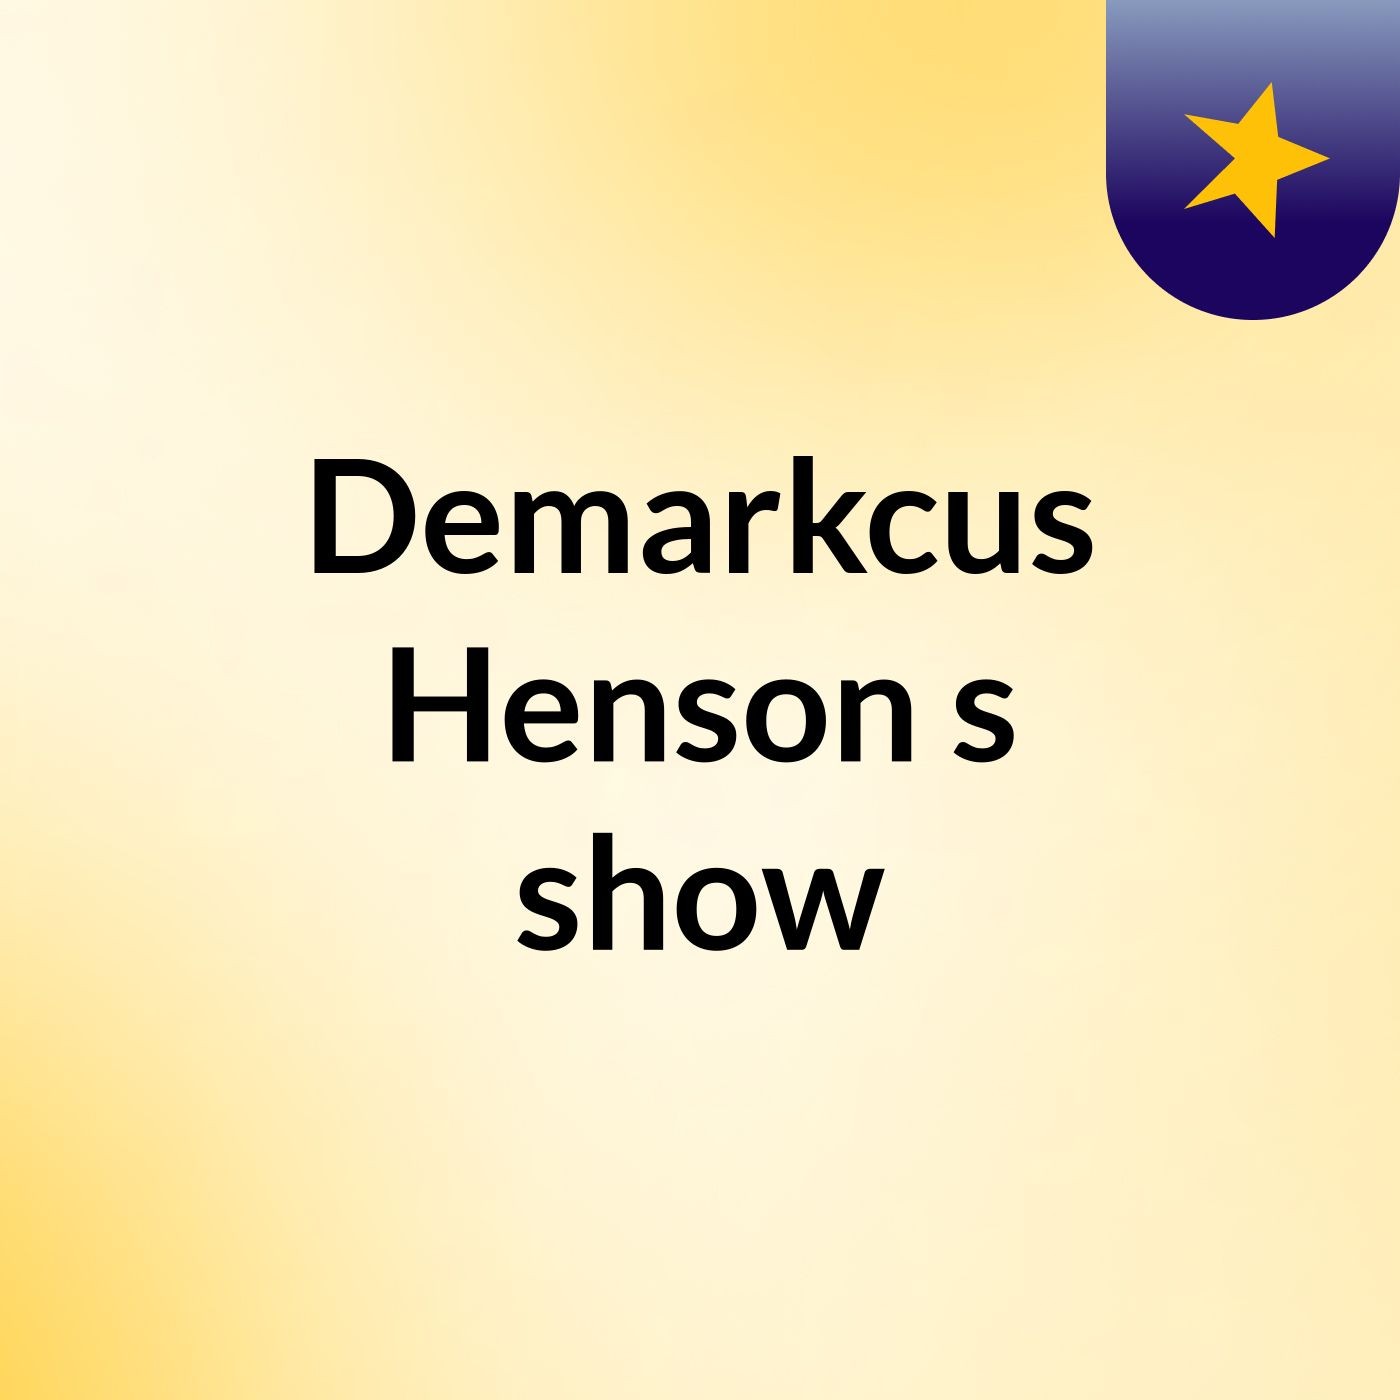 Episode 3 - Demarkcus Henson's show